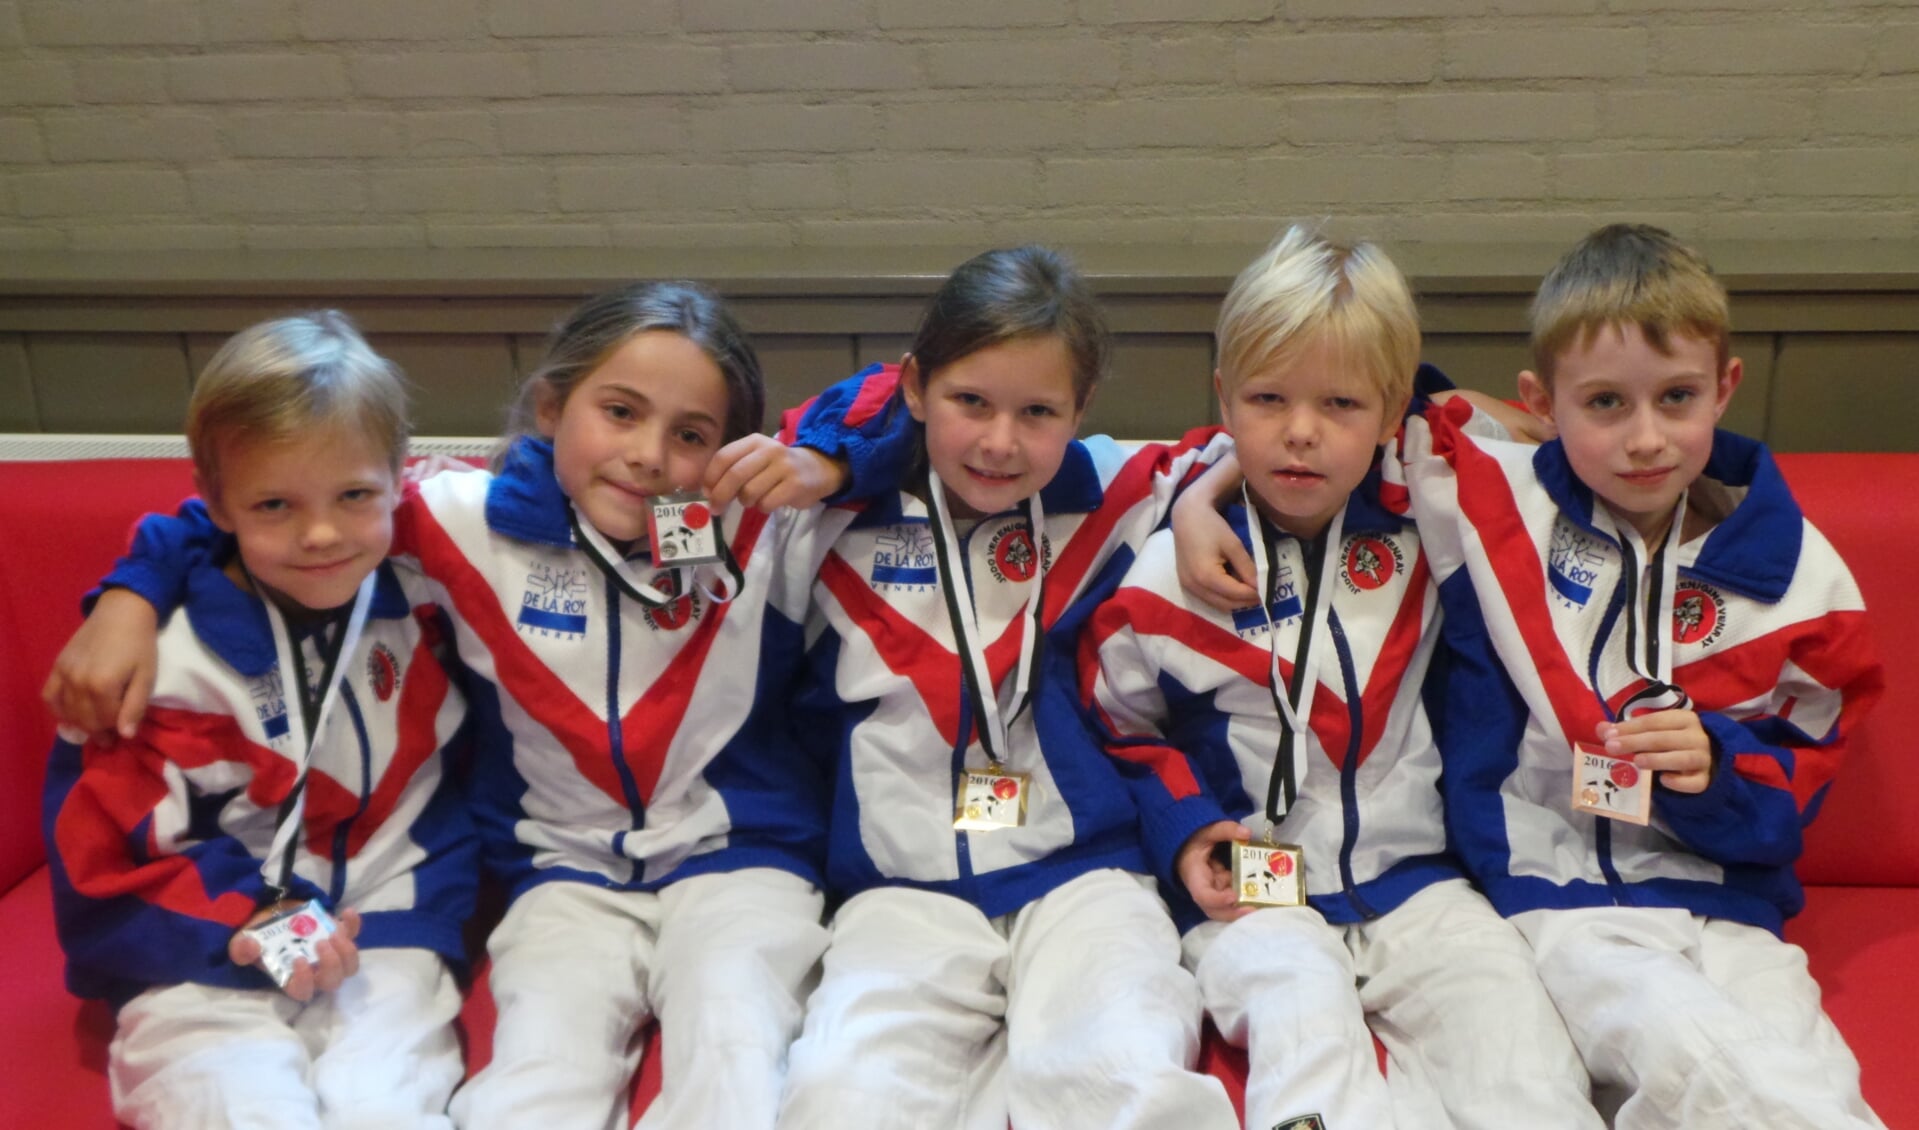 Vijf van de succesvolle judoka's van Judovereniging Venray.